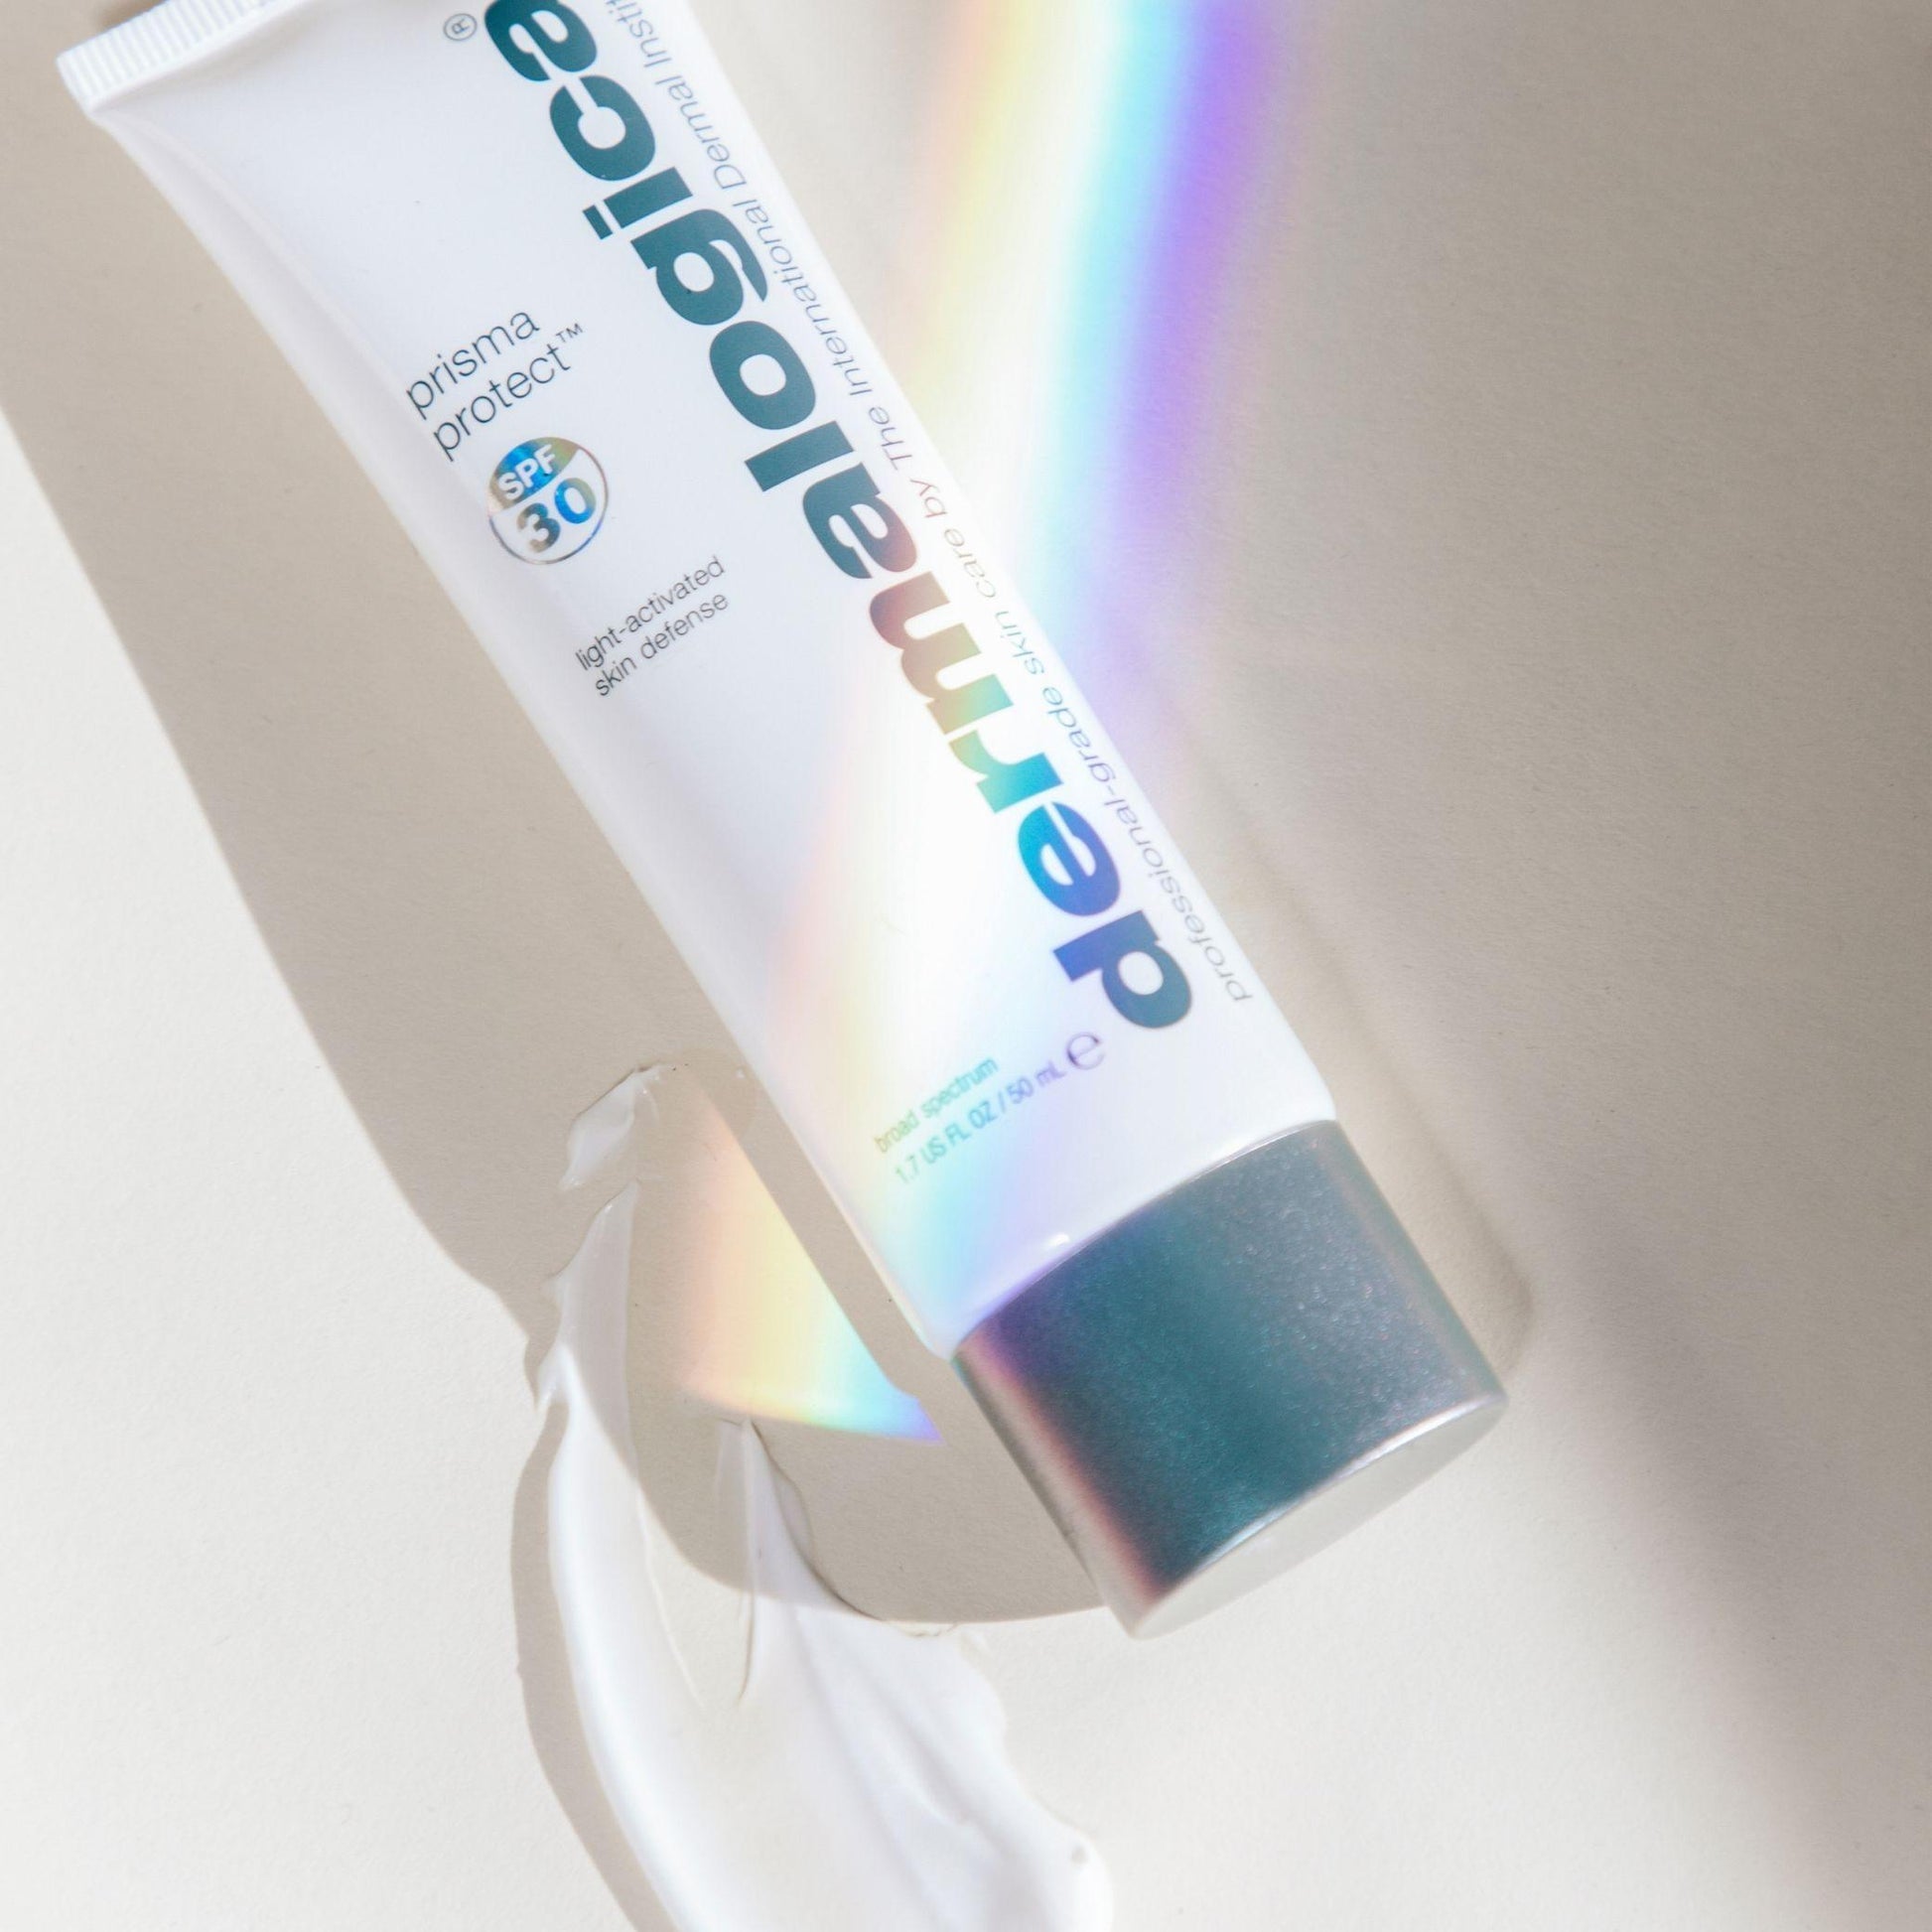 prisma protect spf30 moisturizer - Dermalogica Singapore